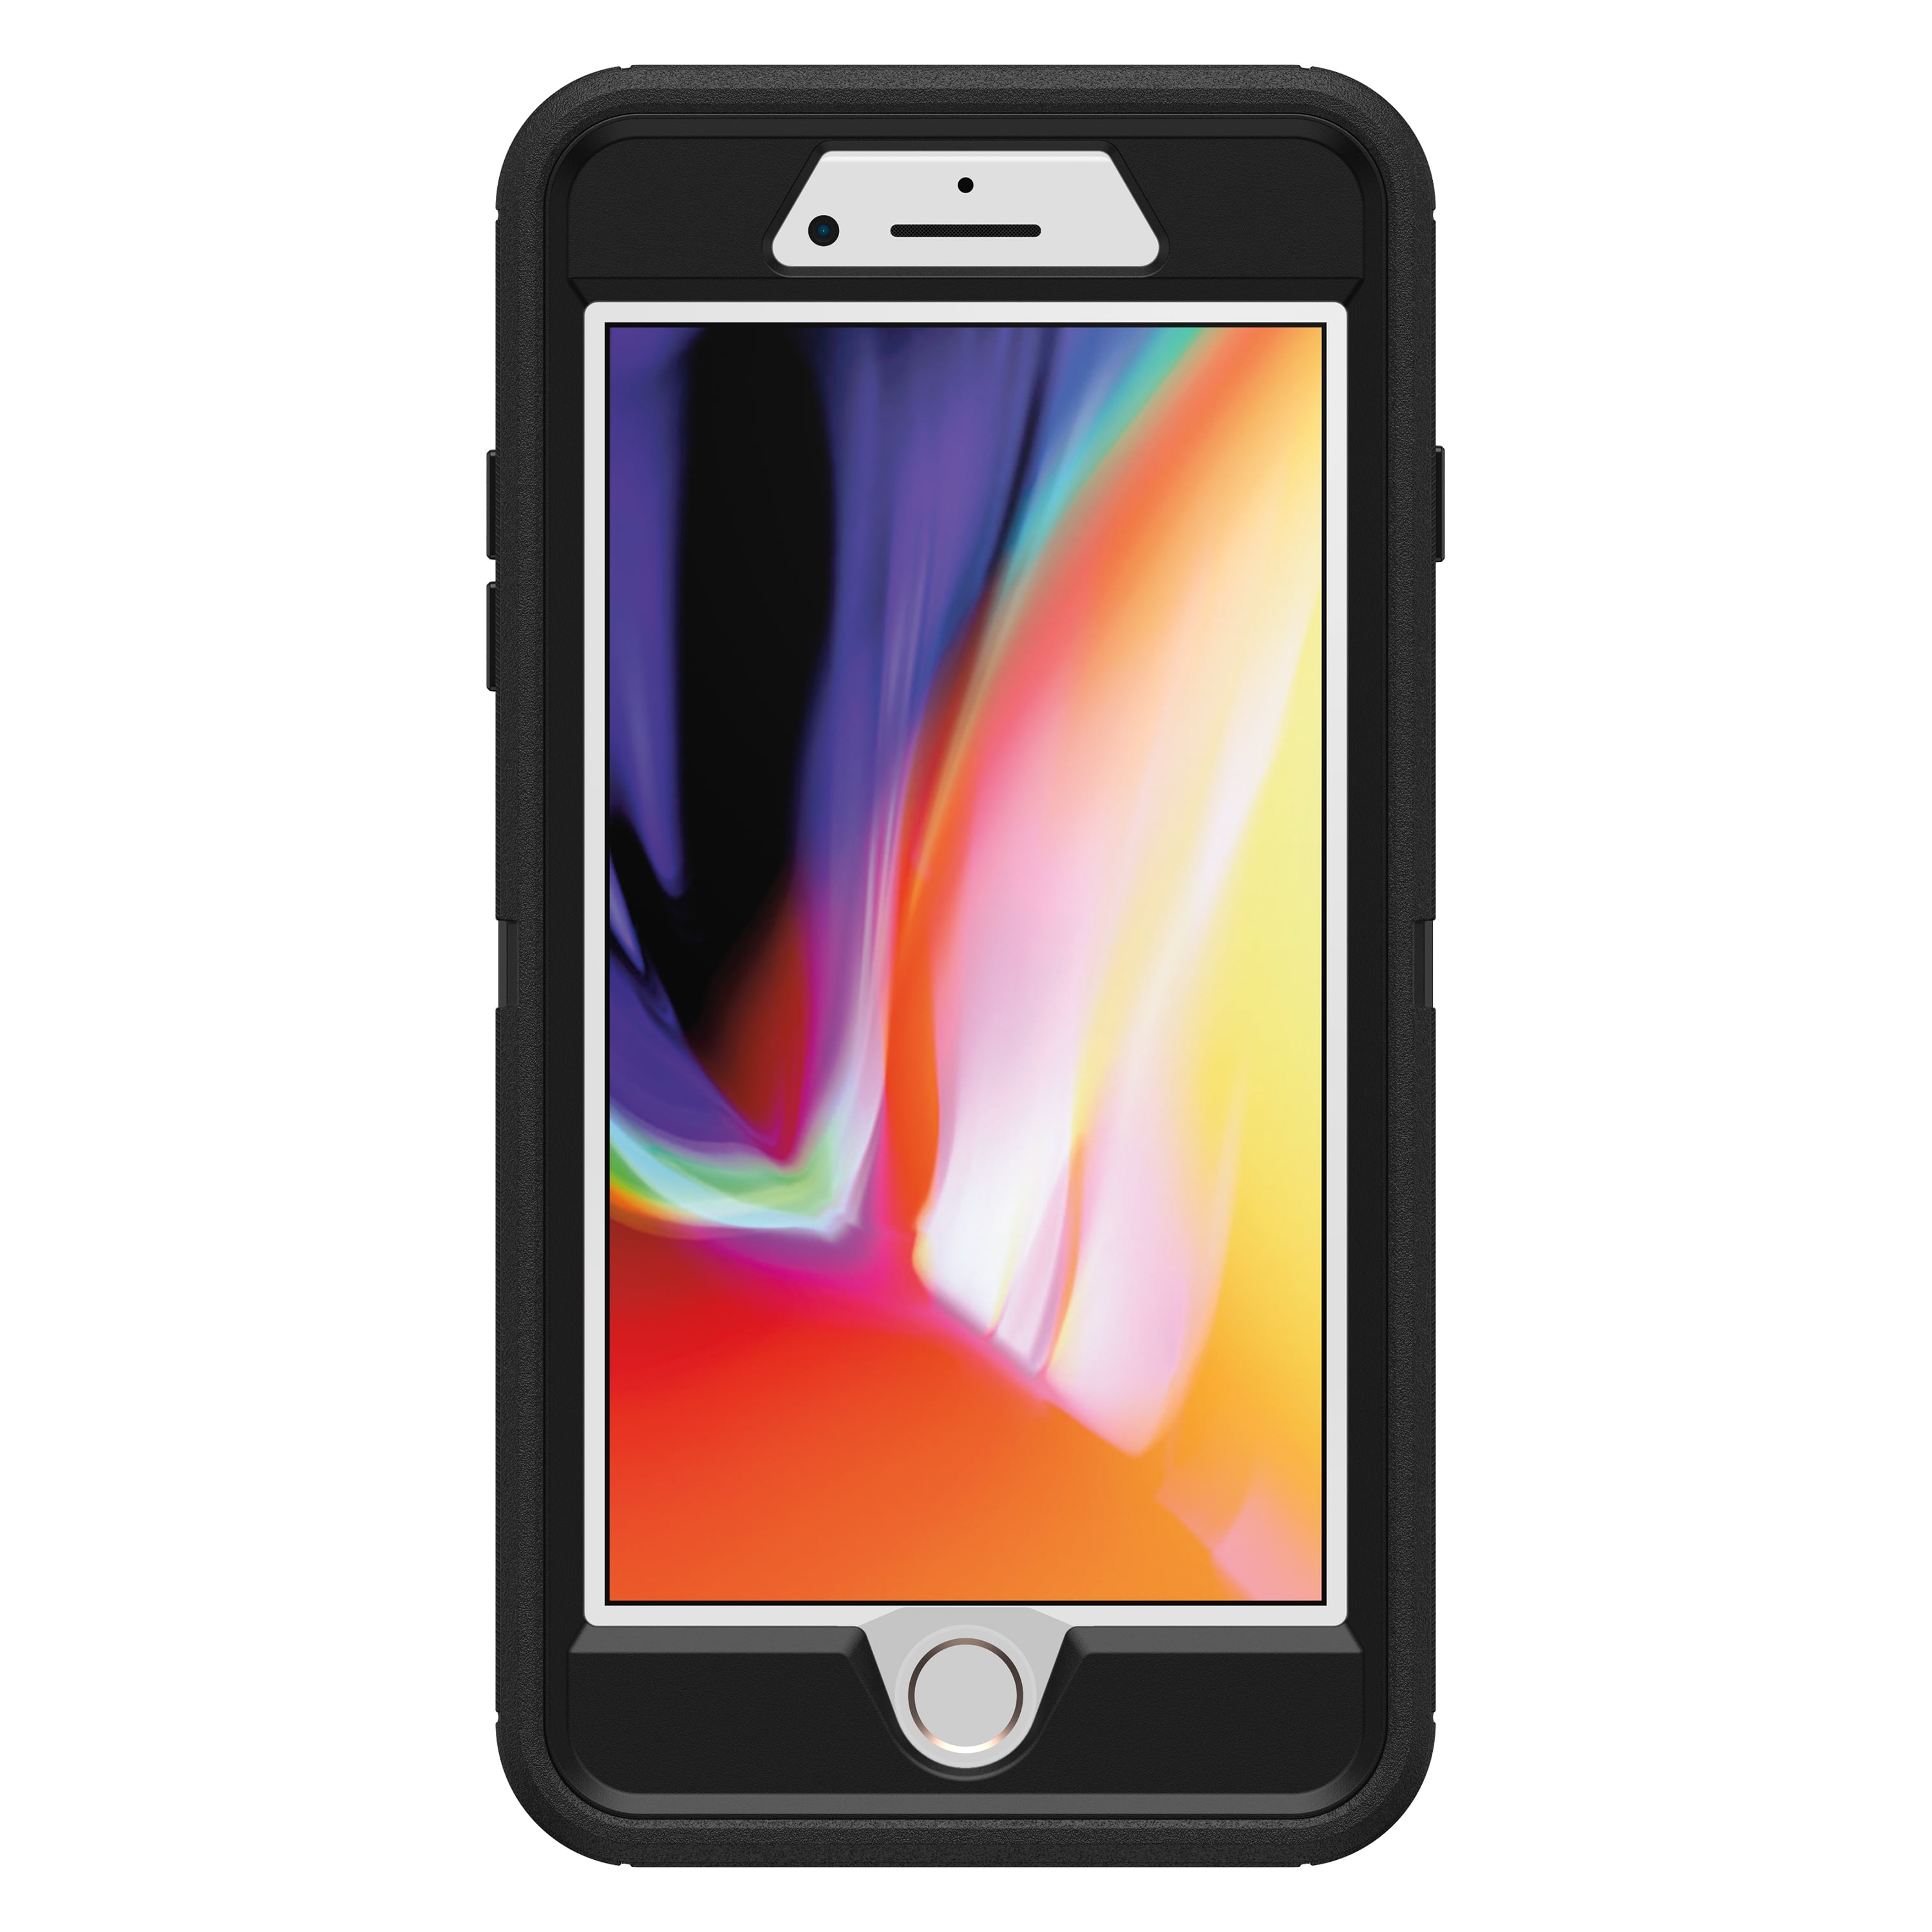 OtterBox iPhone 7 Plus/8 Plus Defender Series Protective Case, Black